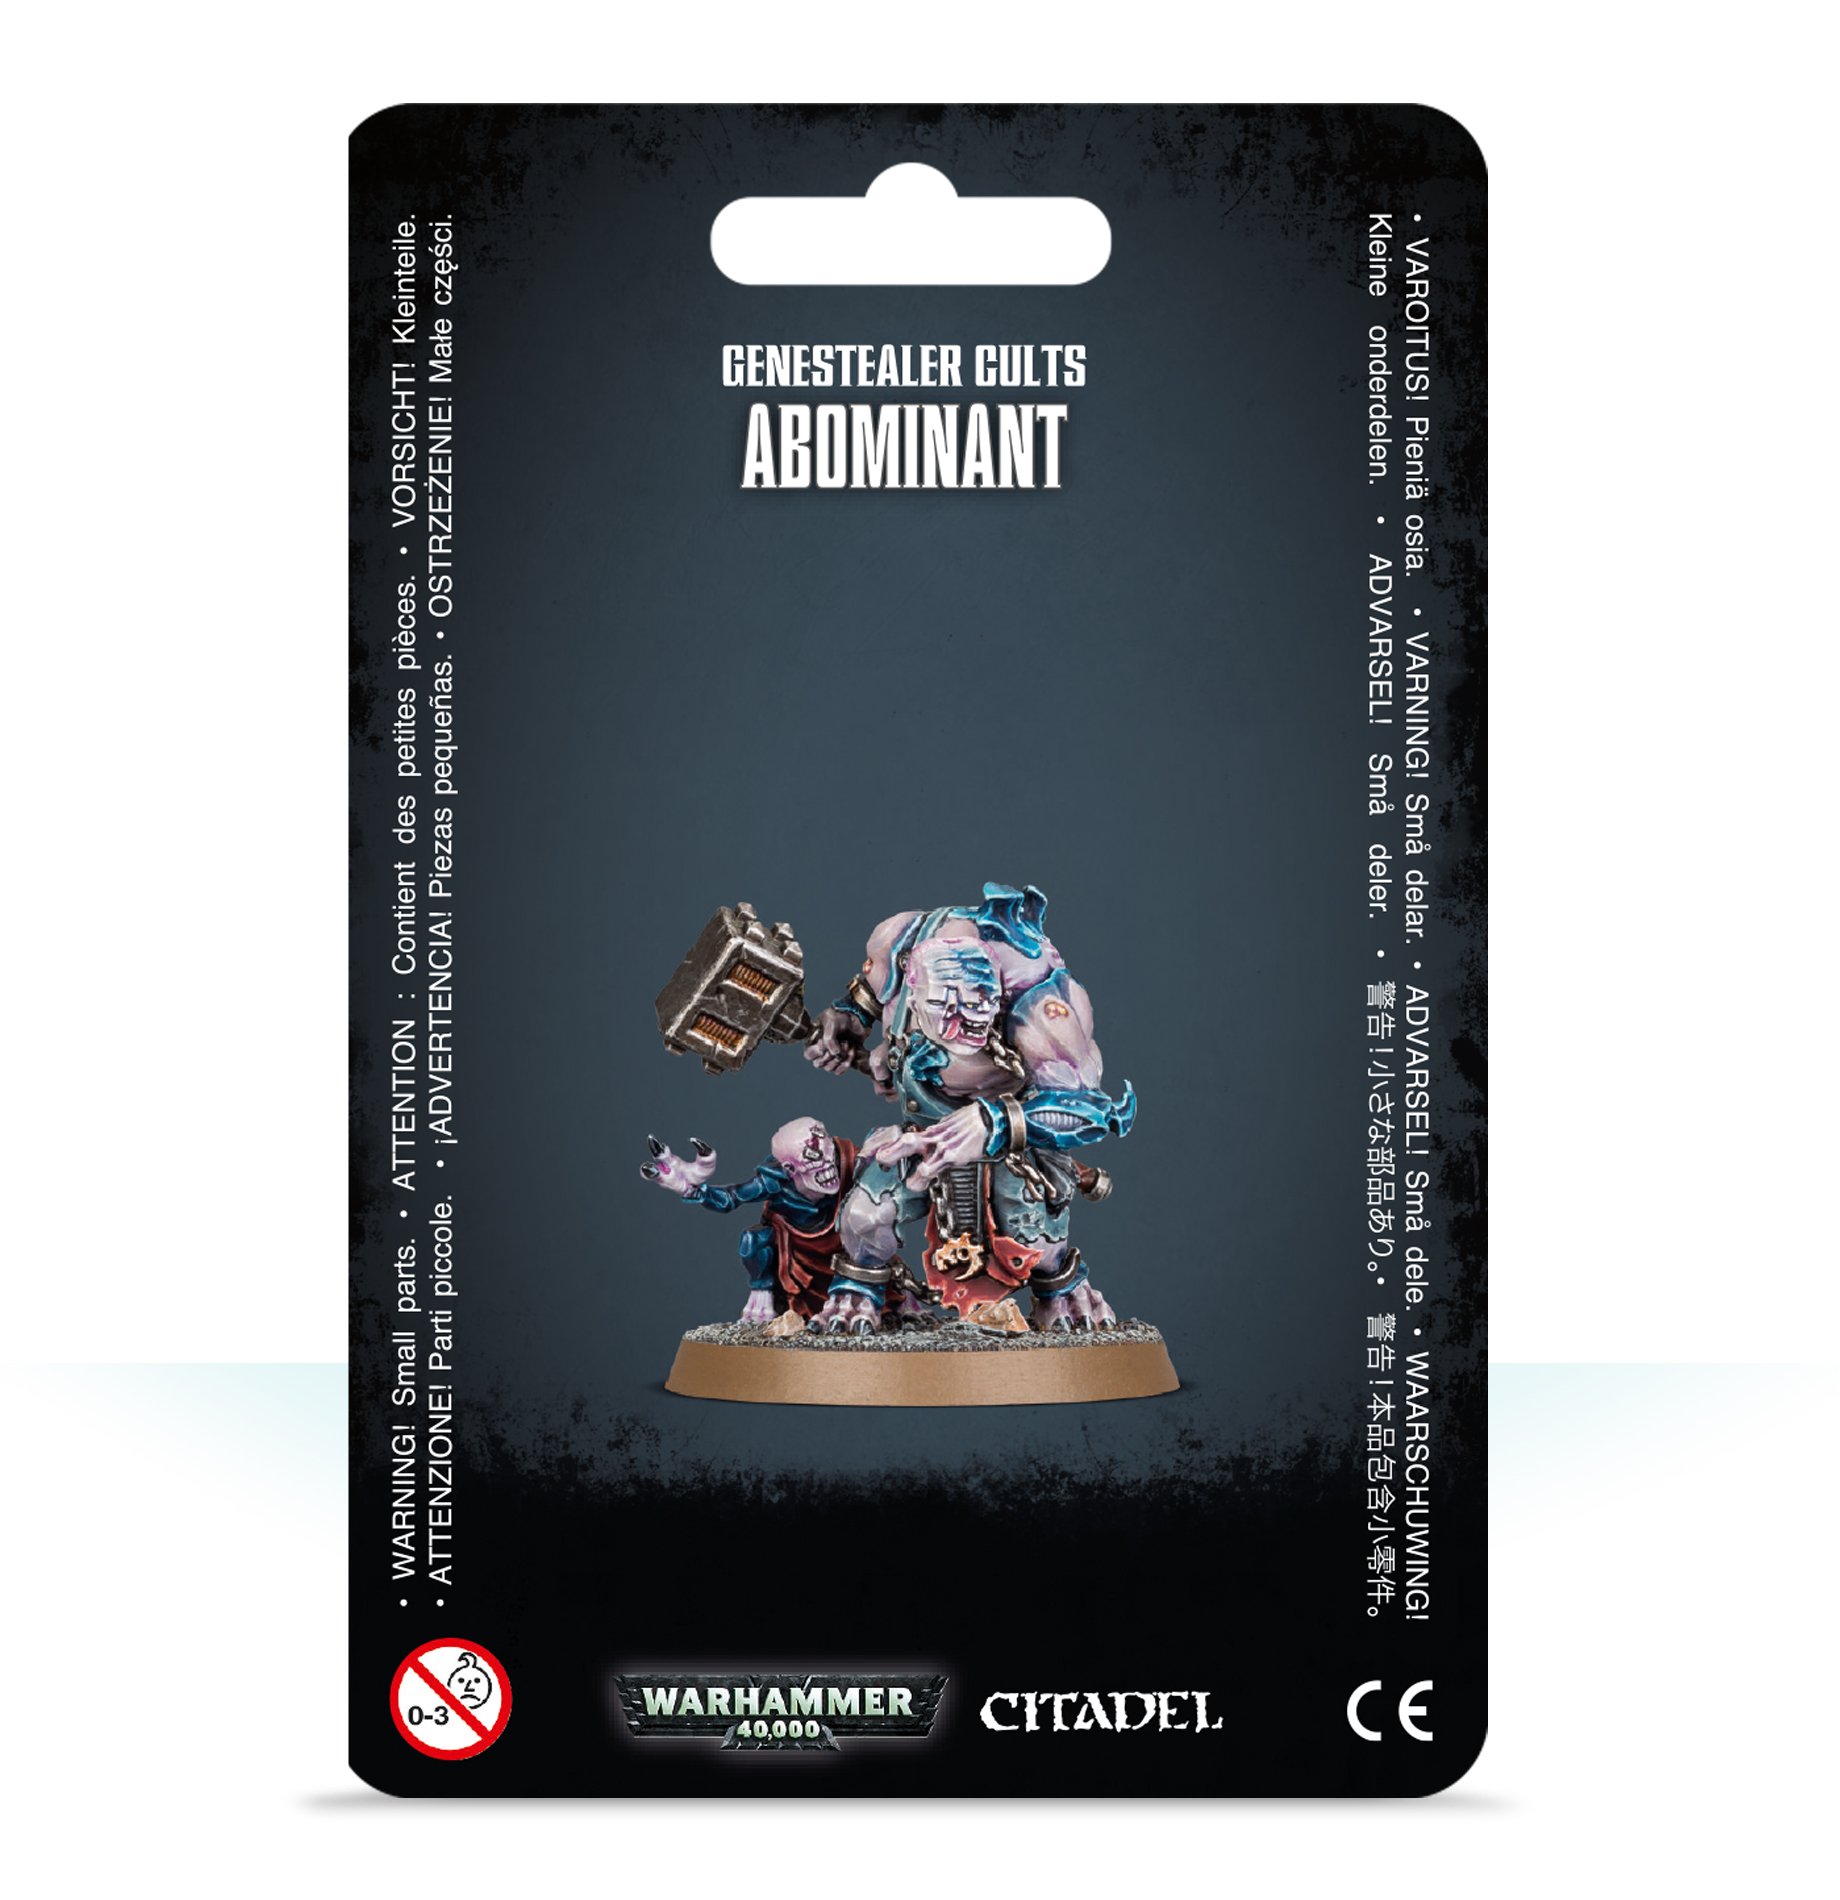 Abominant - 51-59 - Genestealer Cults - Warhammer 40.000